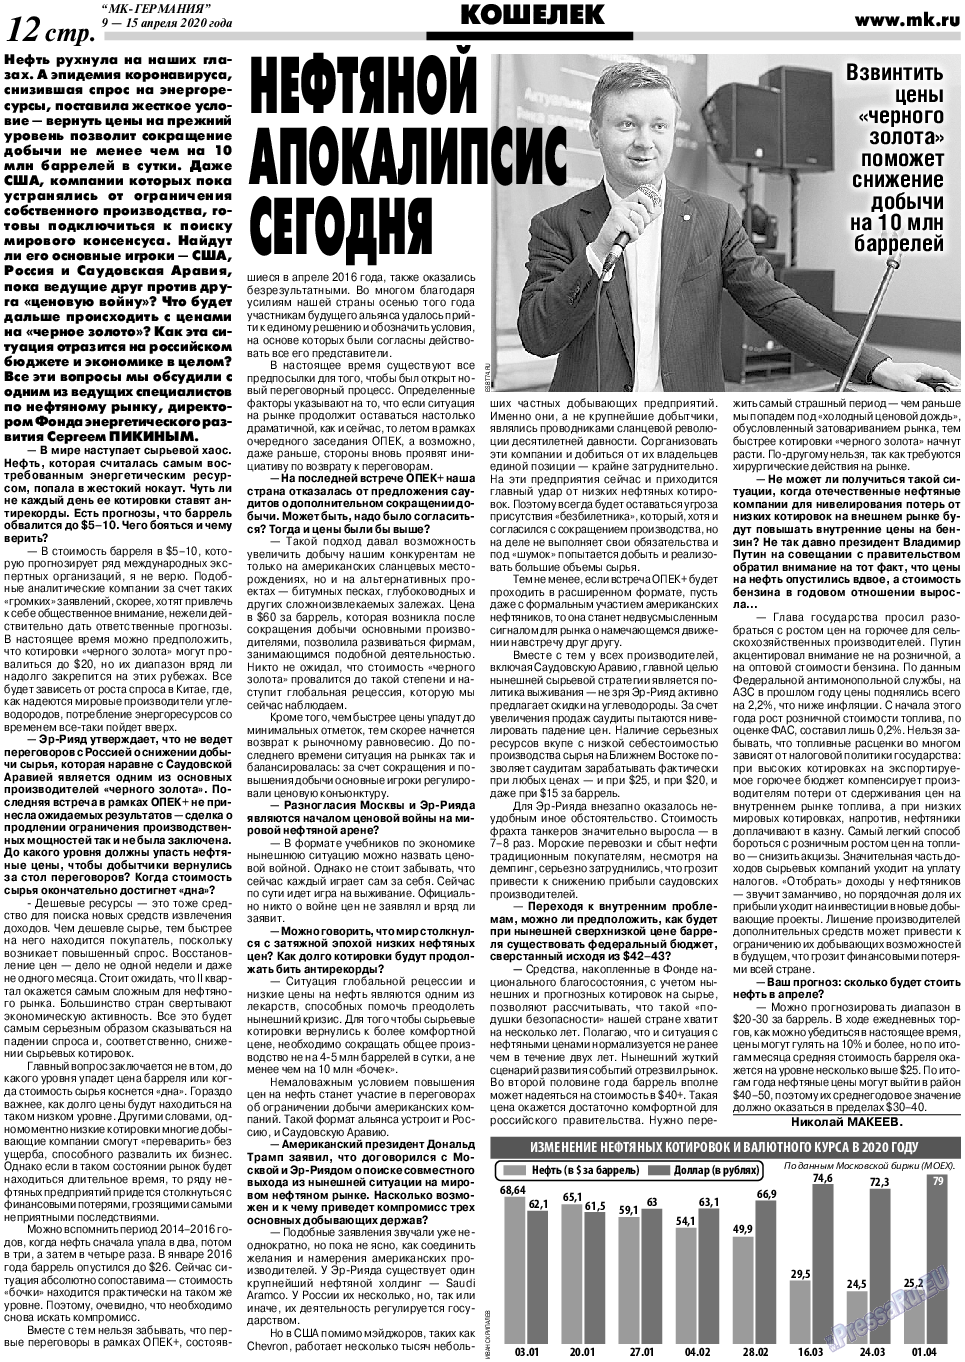 МК-Германия, газета. 2020 №15 стр.12